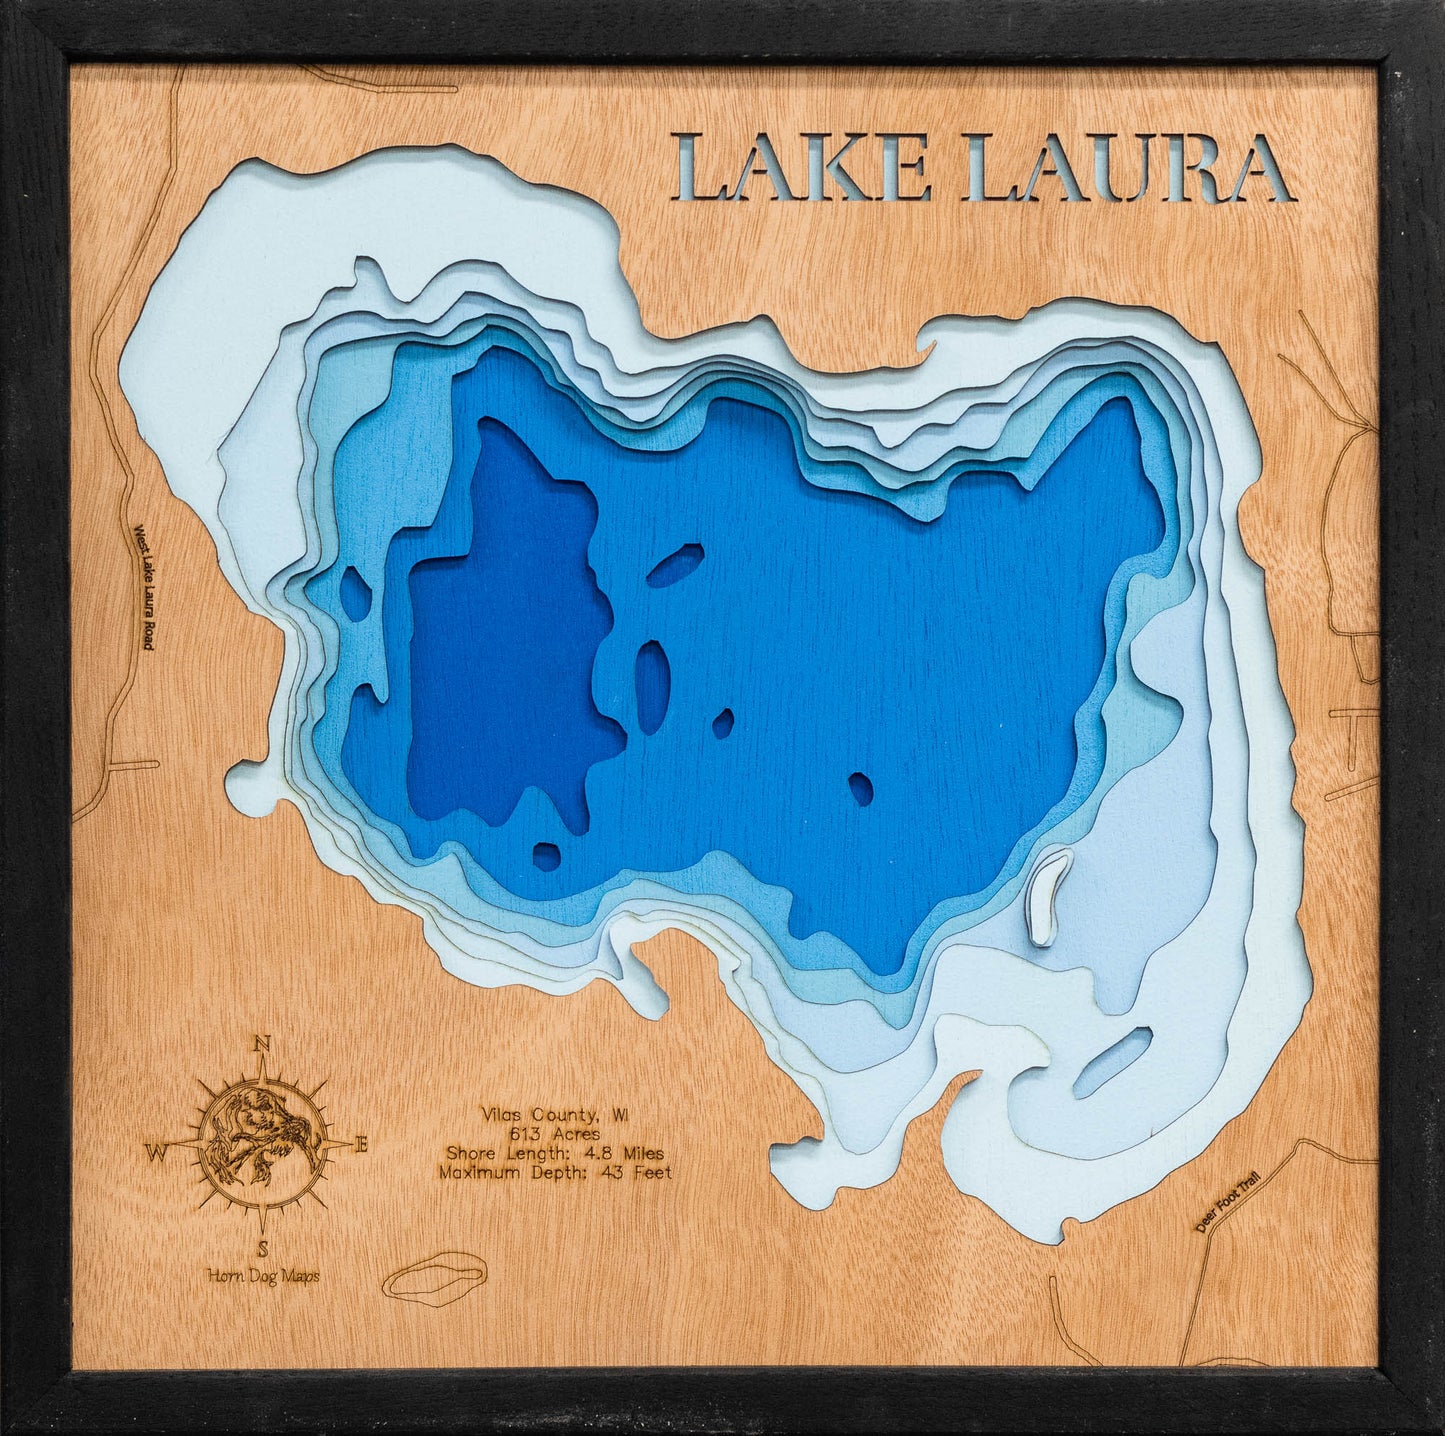 Lake Laura in Vilas County, WI  